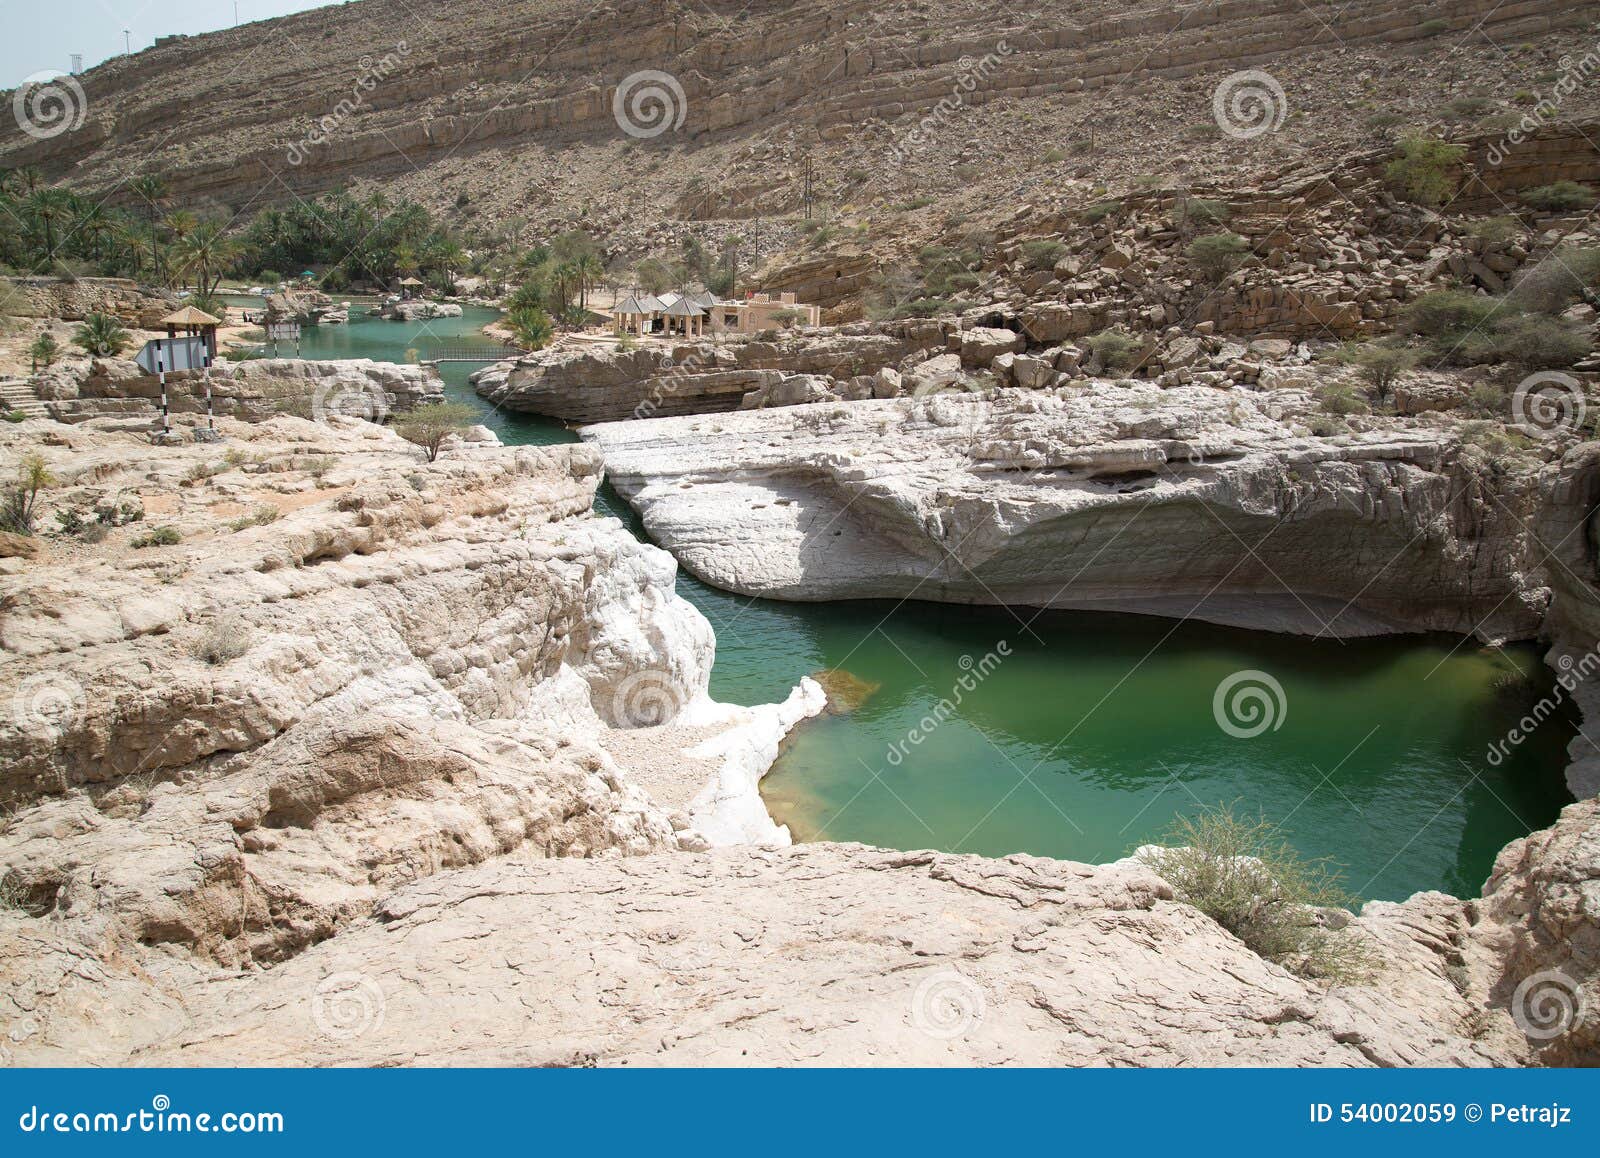 water pool in wadi bani khalid